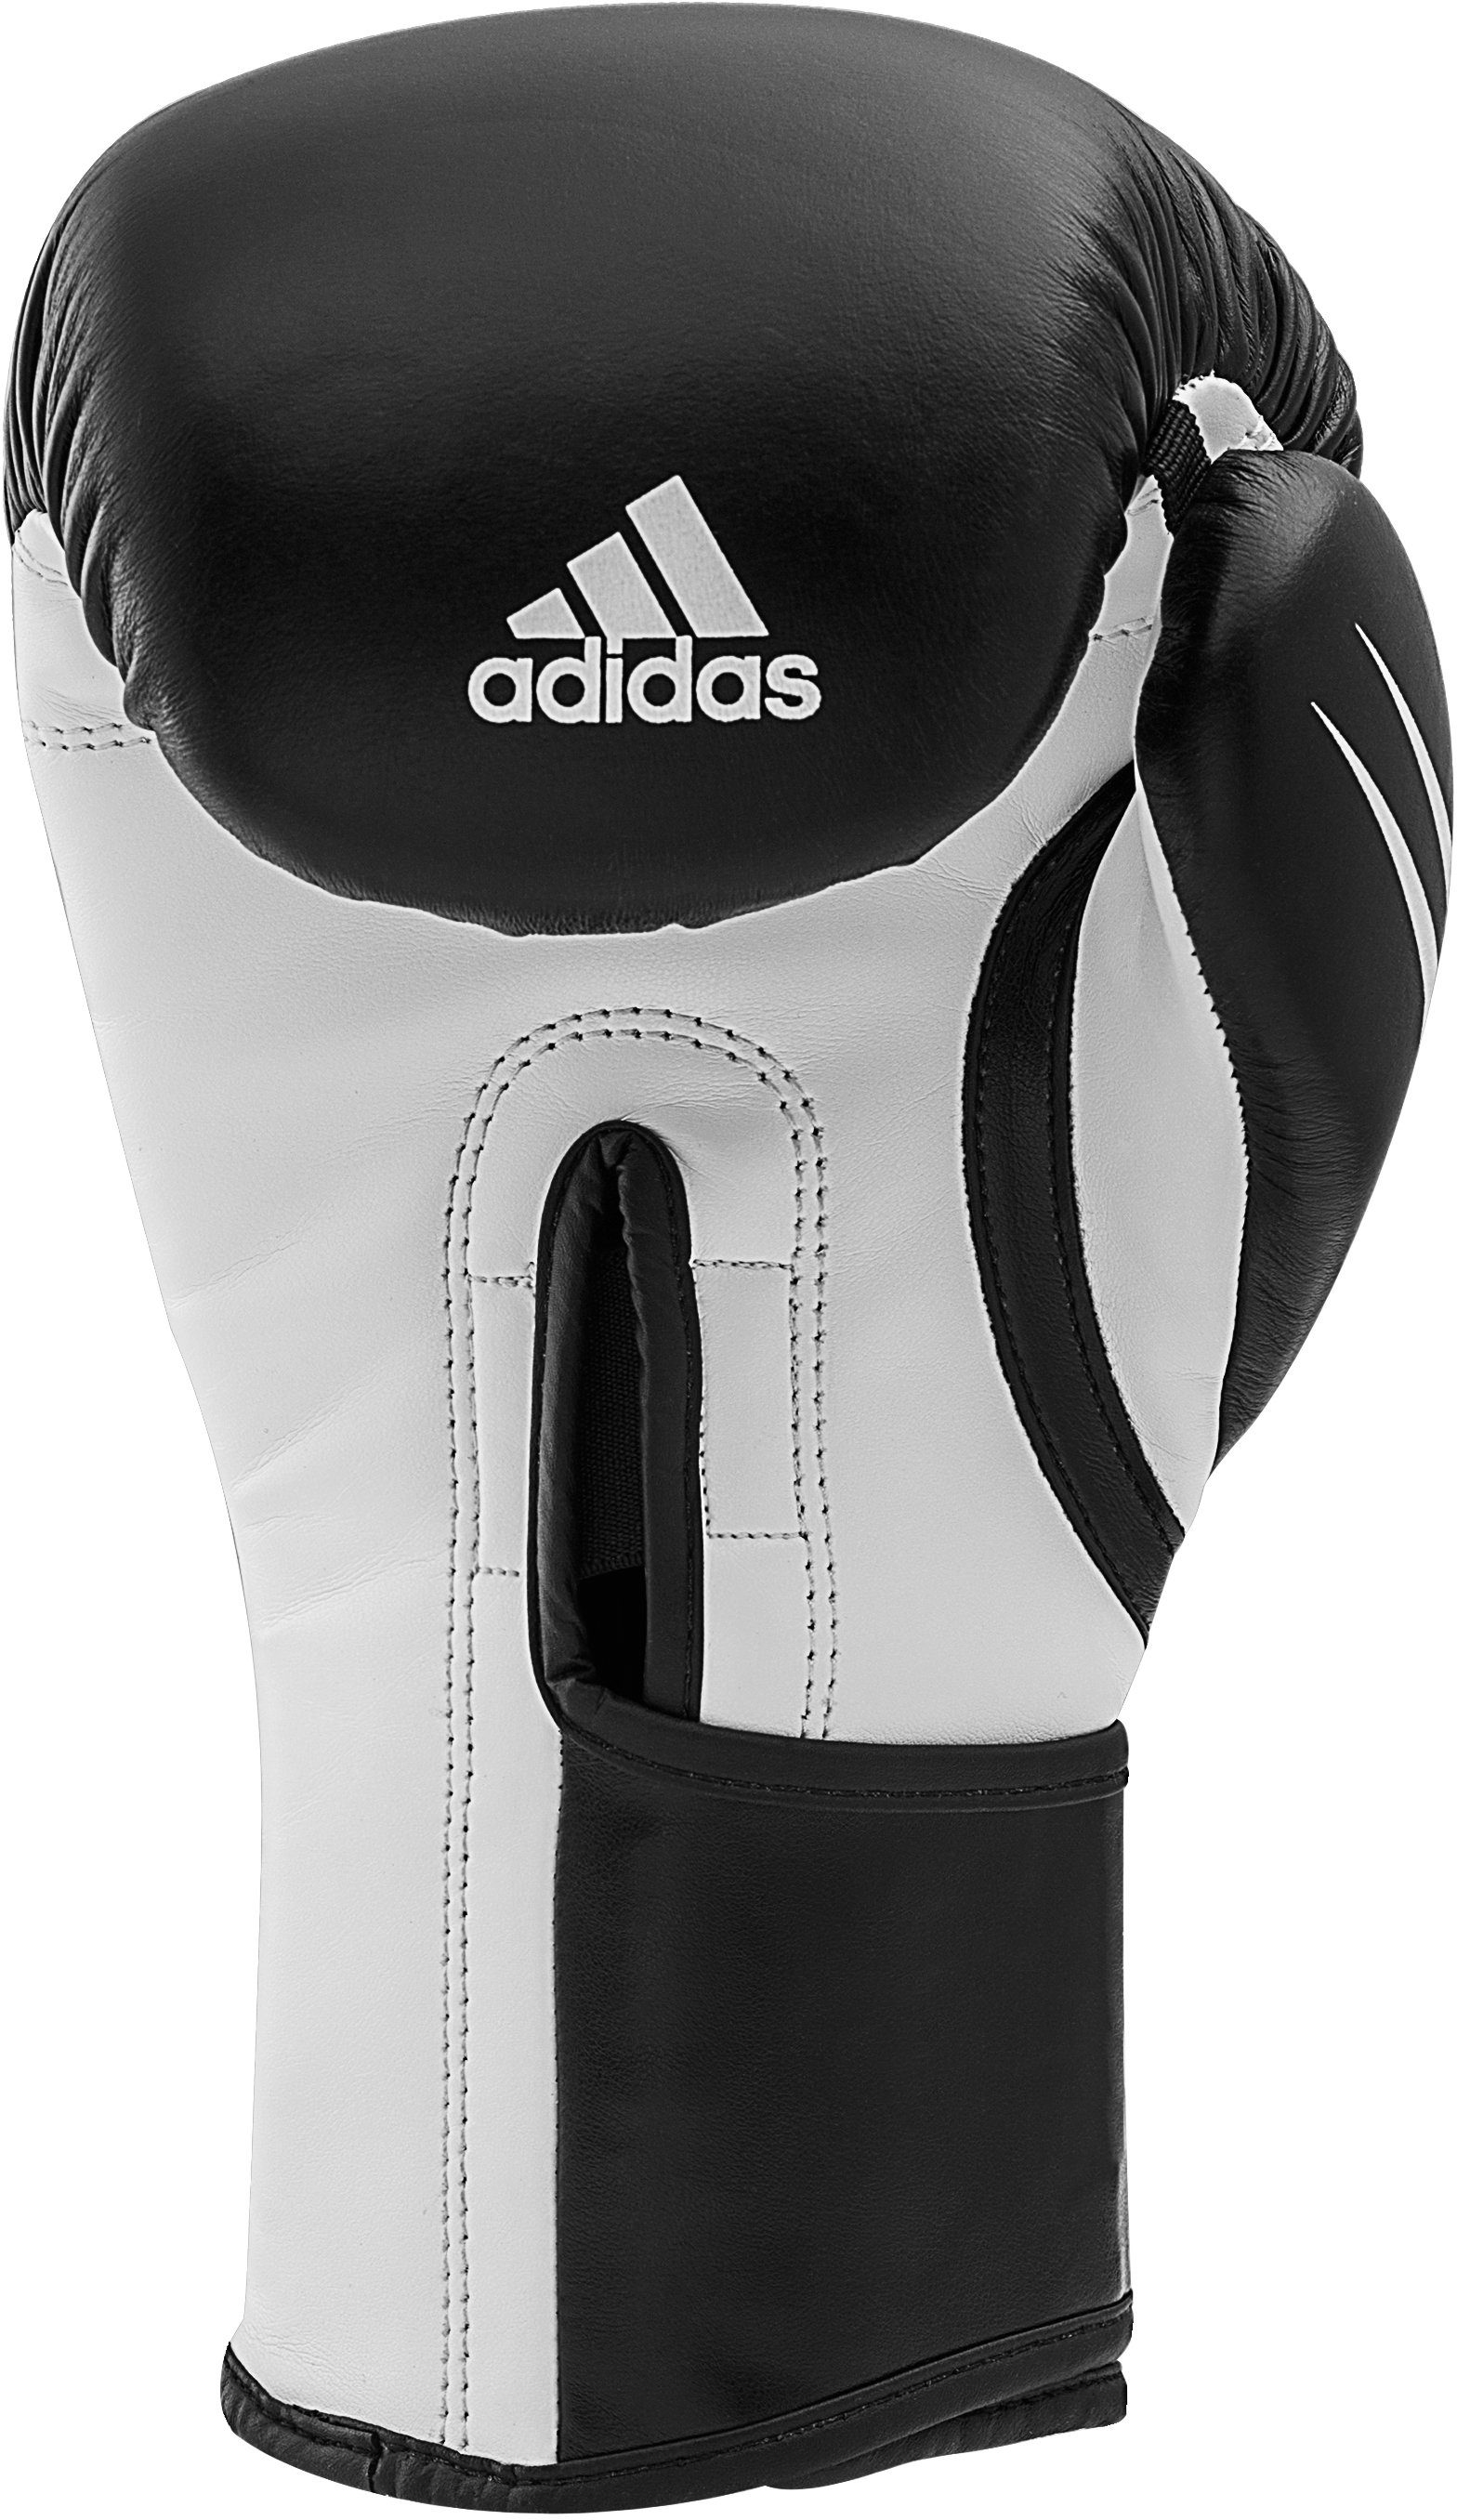 adidas Boxhandschuhe Performance schwarz/weiß